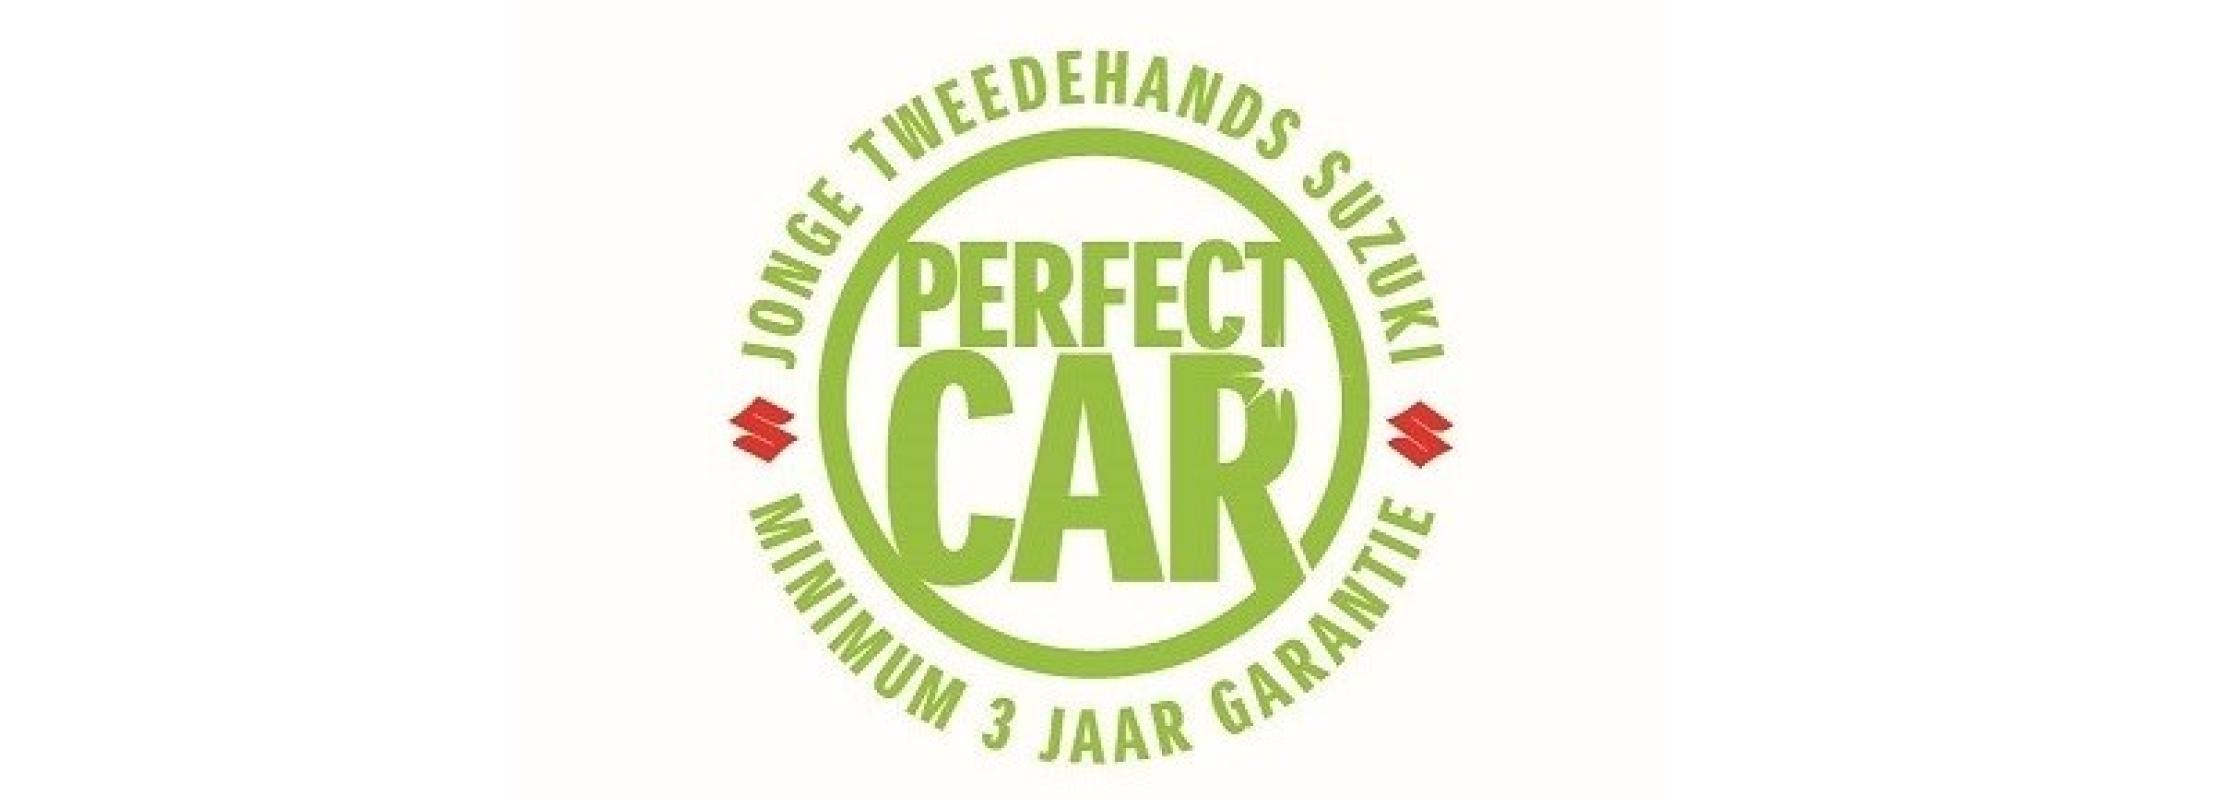 Perfect Car Label